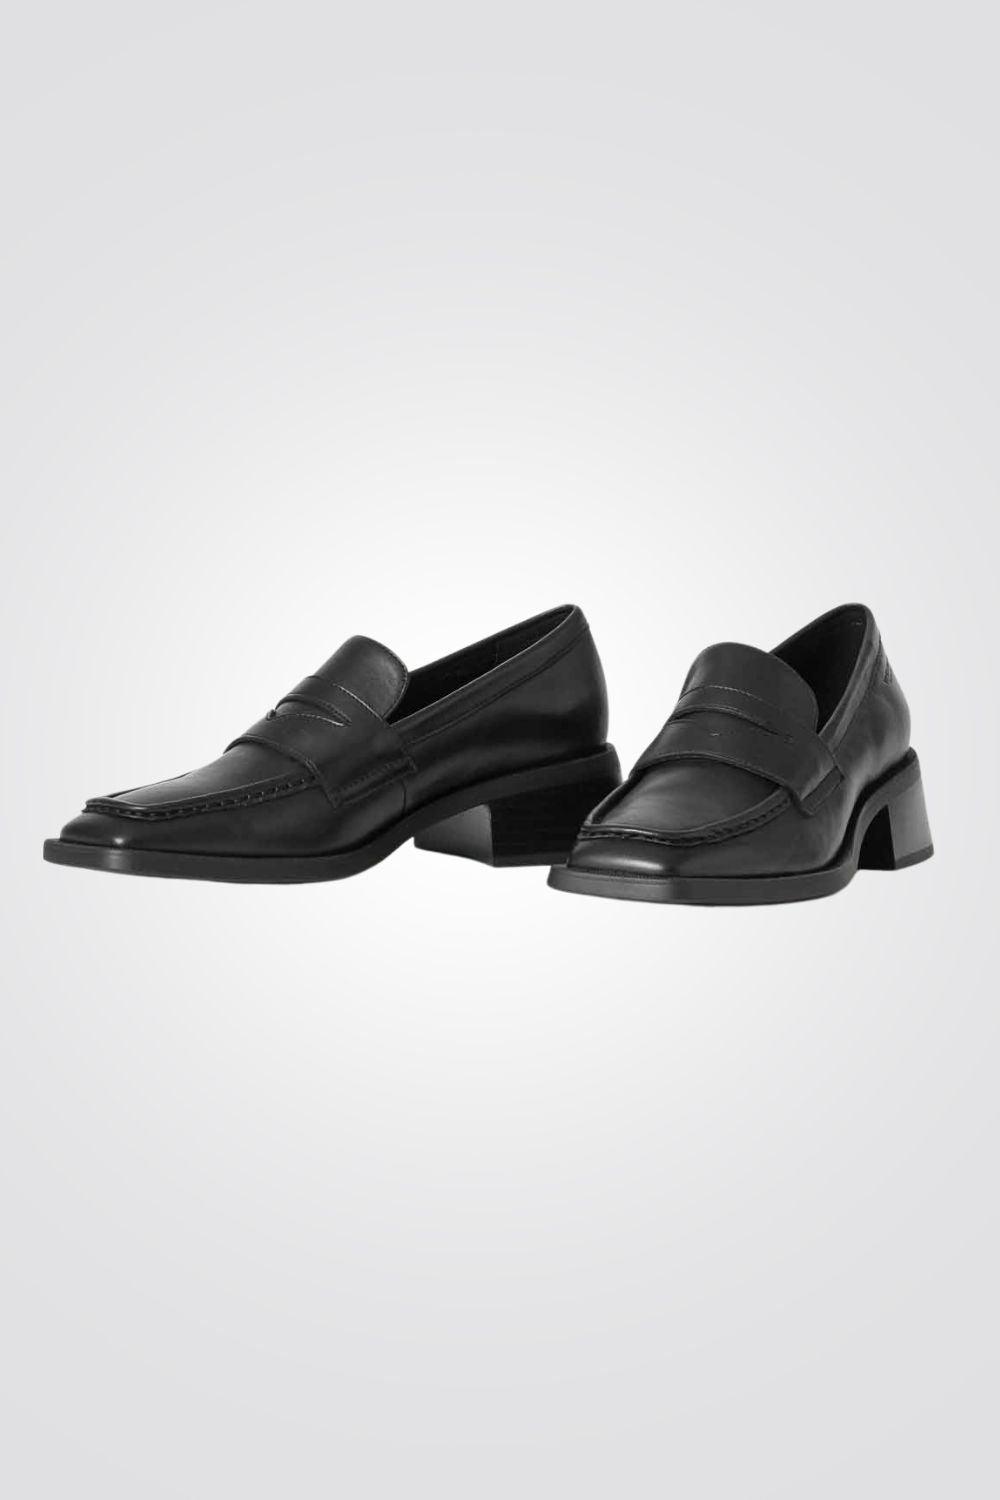 VAGABOND - נעלי מוקסין BLANCA בצבע שחור - MASHBIR//365